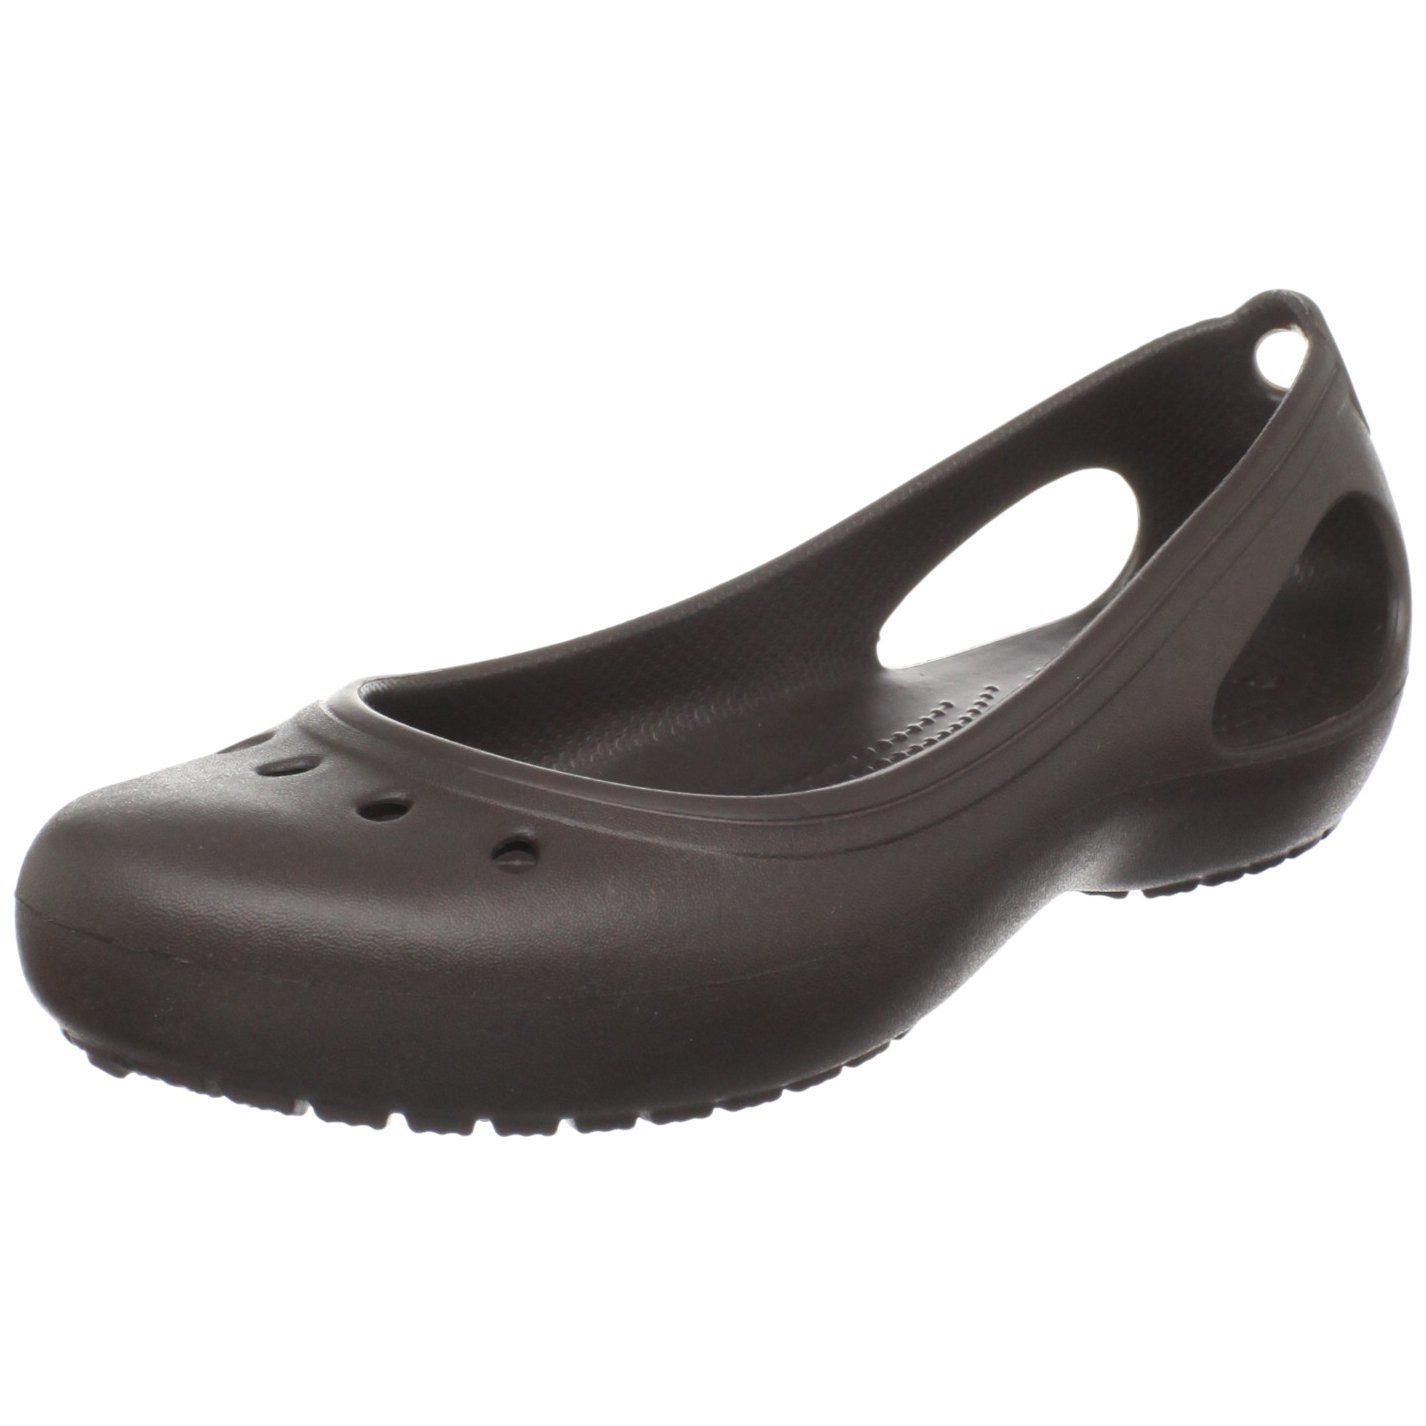 Crocs Shoes: Crocs Women's Kadee Ballet Flat